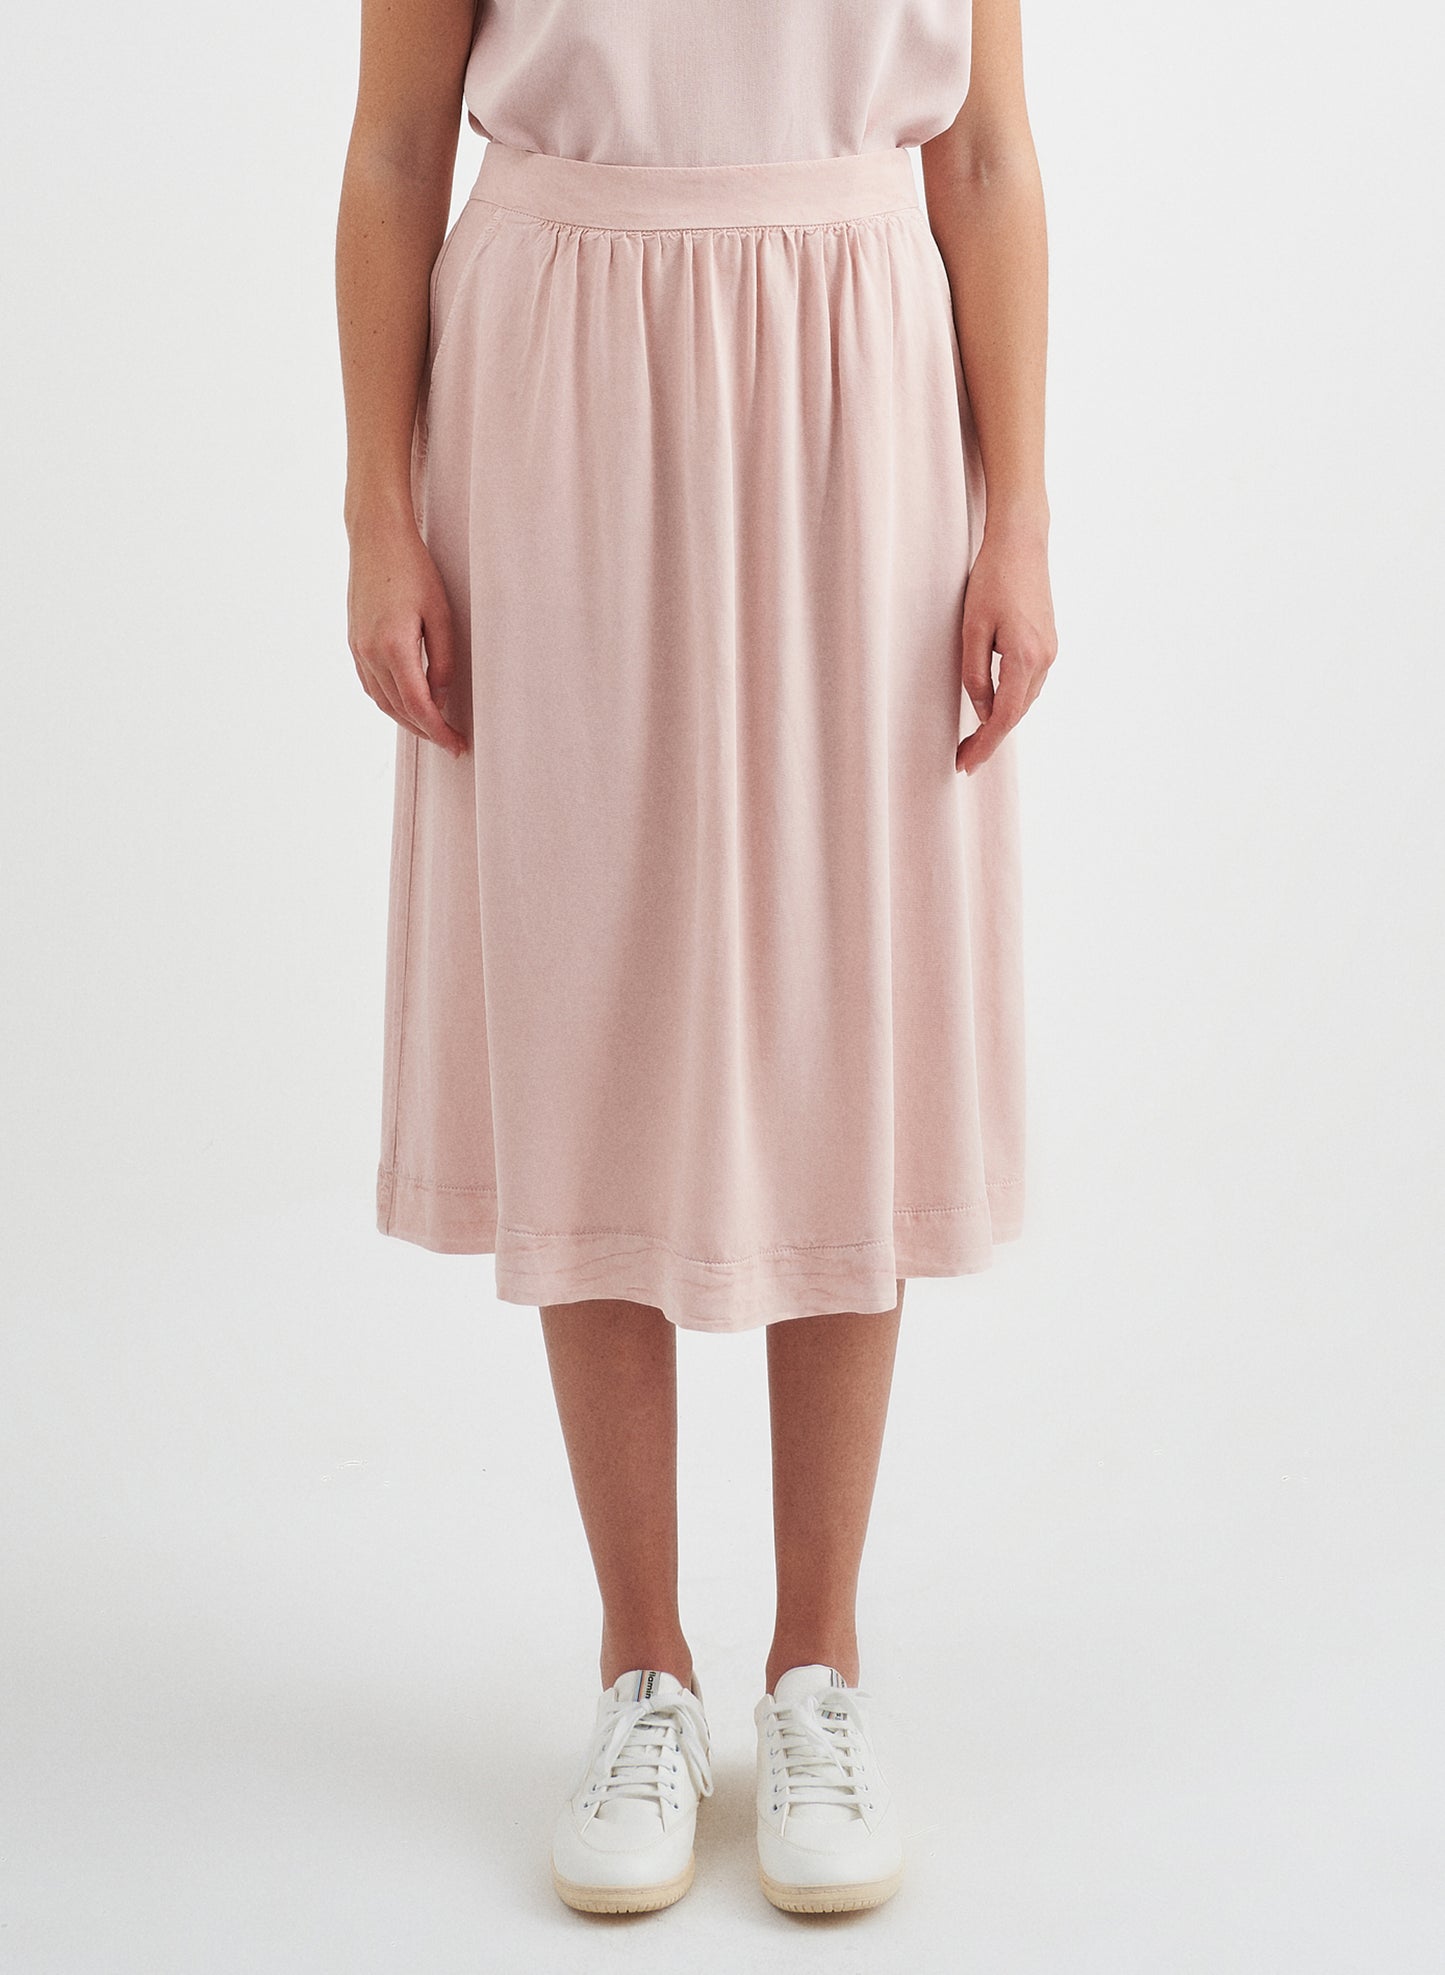 RINA - Long Pleated Tencel™ Skirt - Dusty Rose